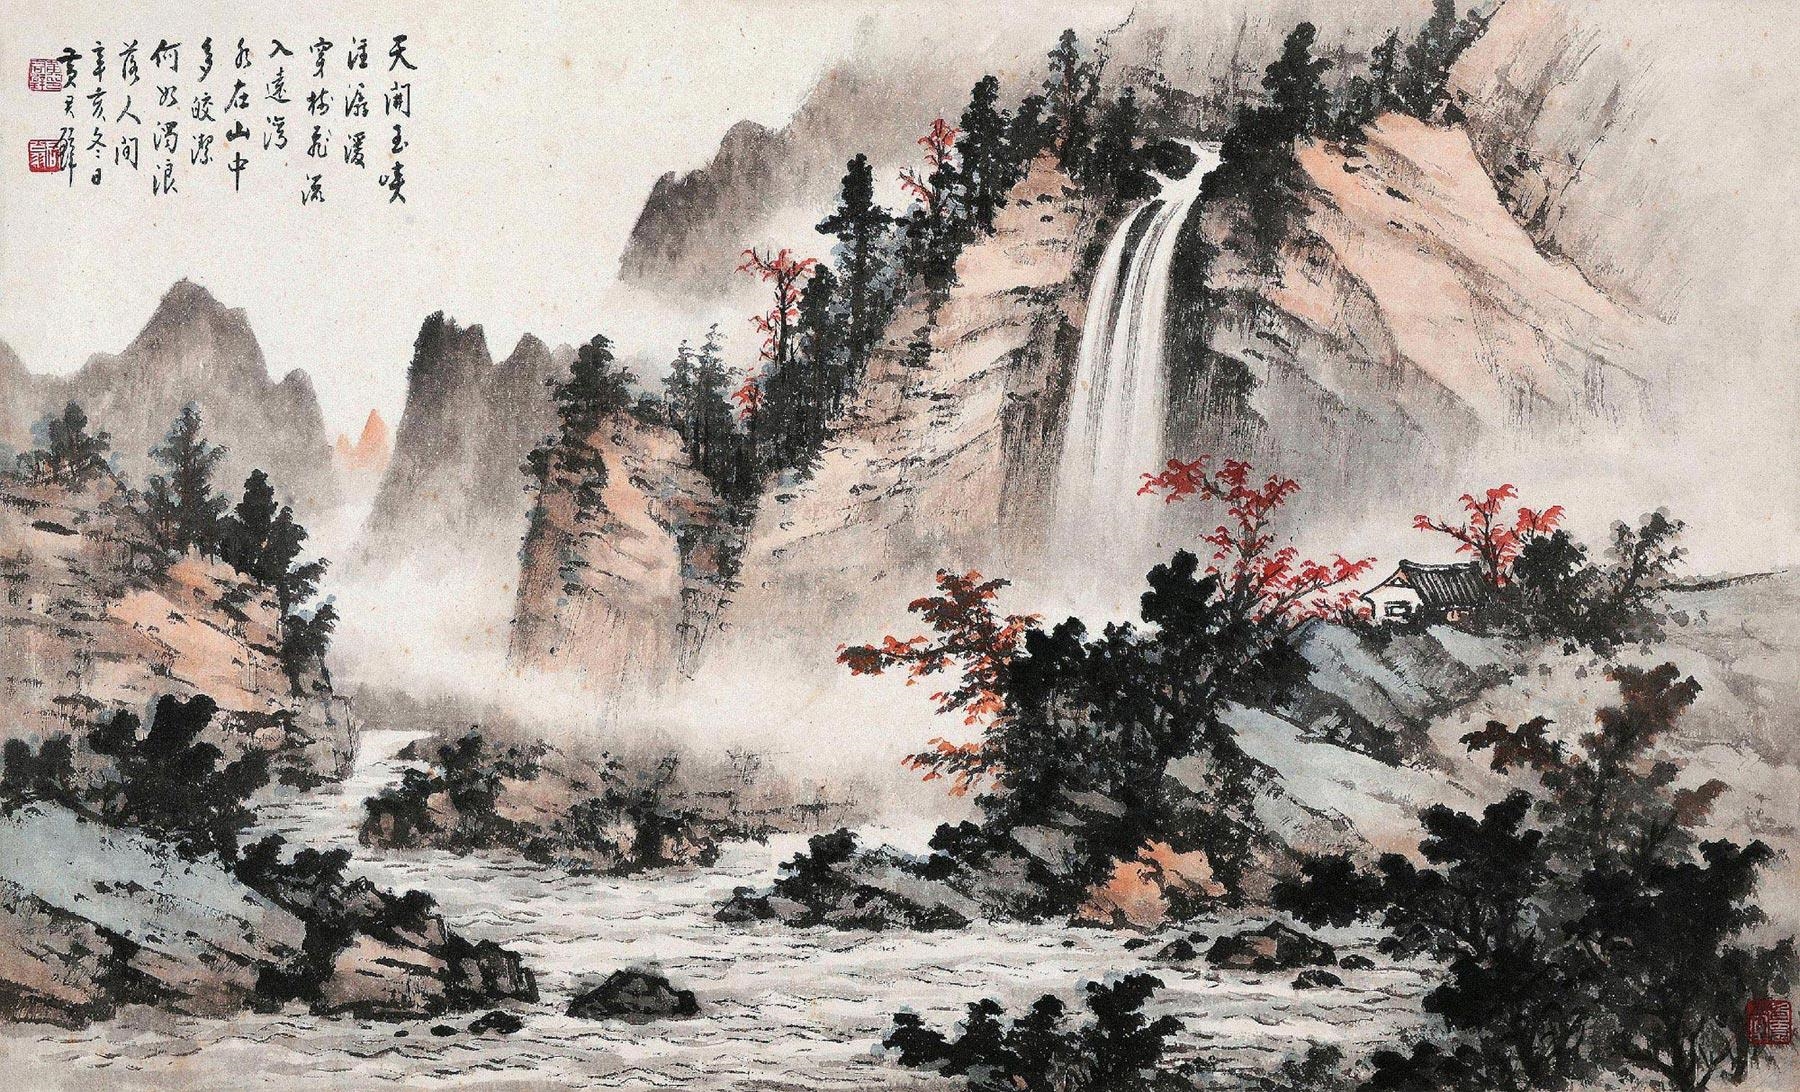 WATERFALL by Huang Junbi, 1971